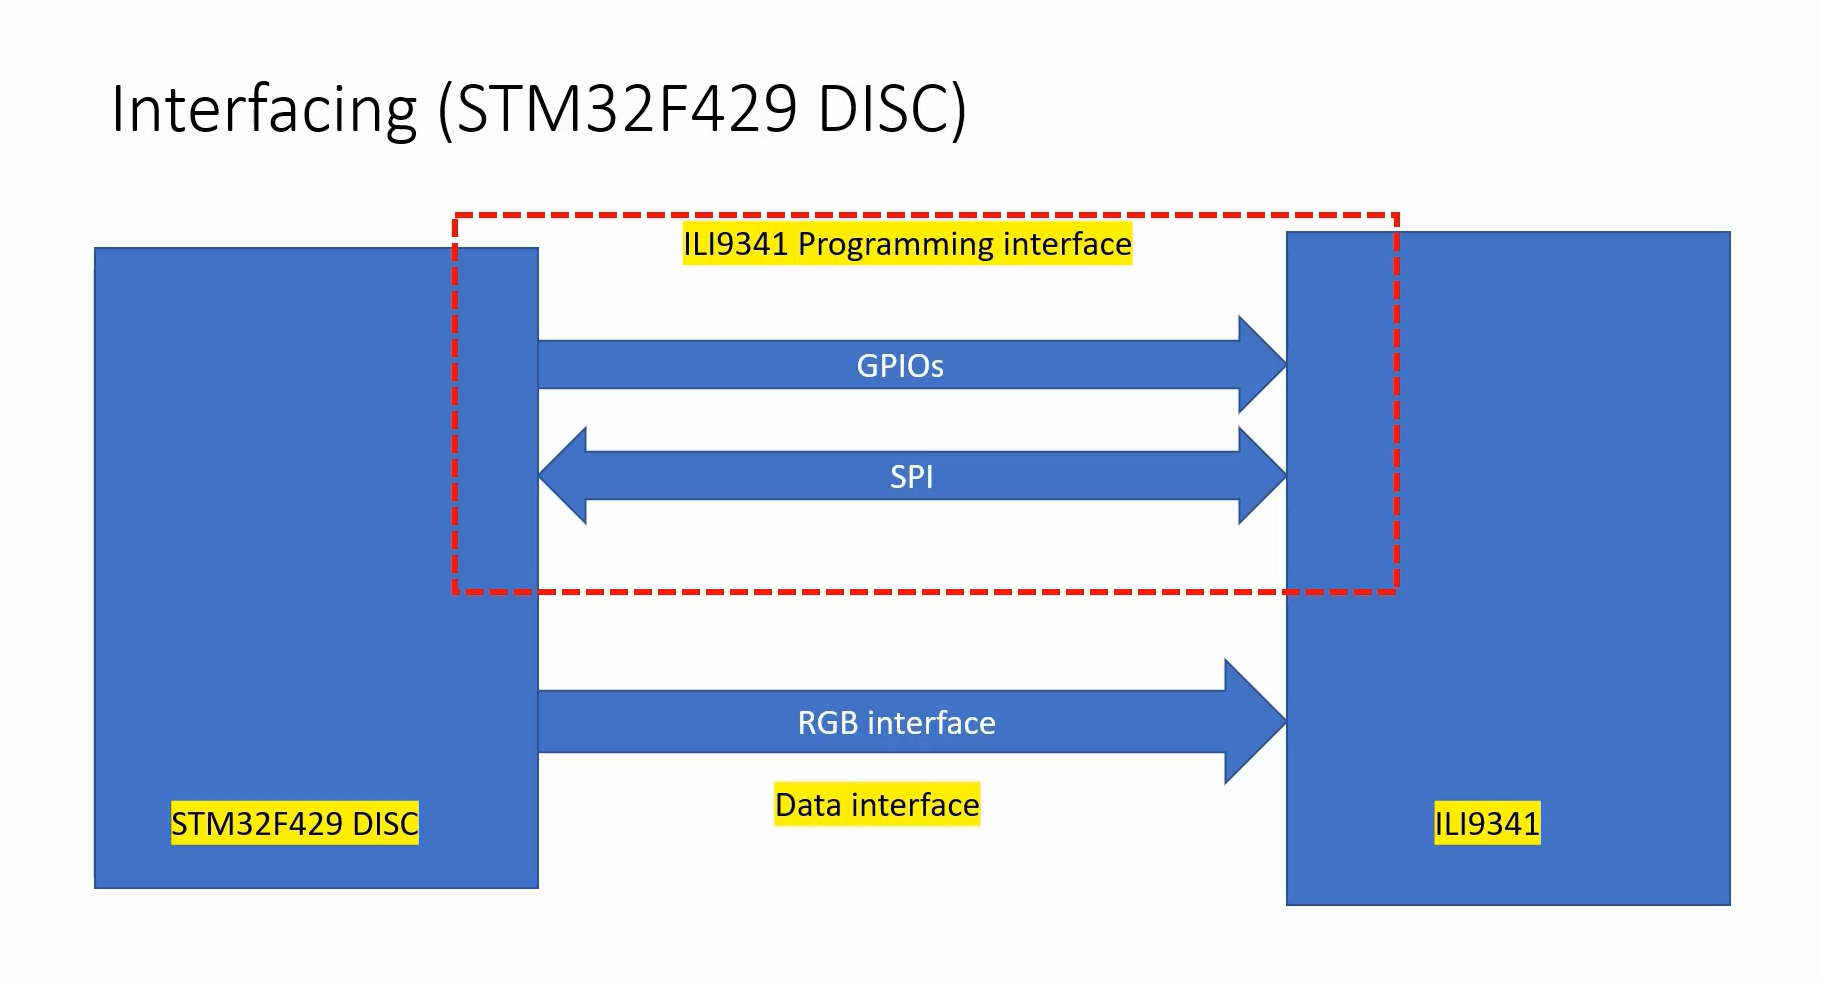 Figure 1. Interfacing(STM32F429 DISC)